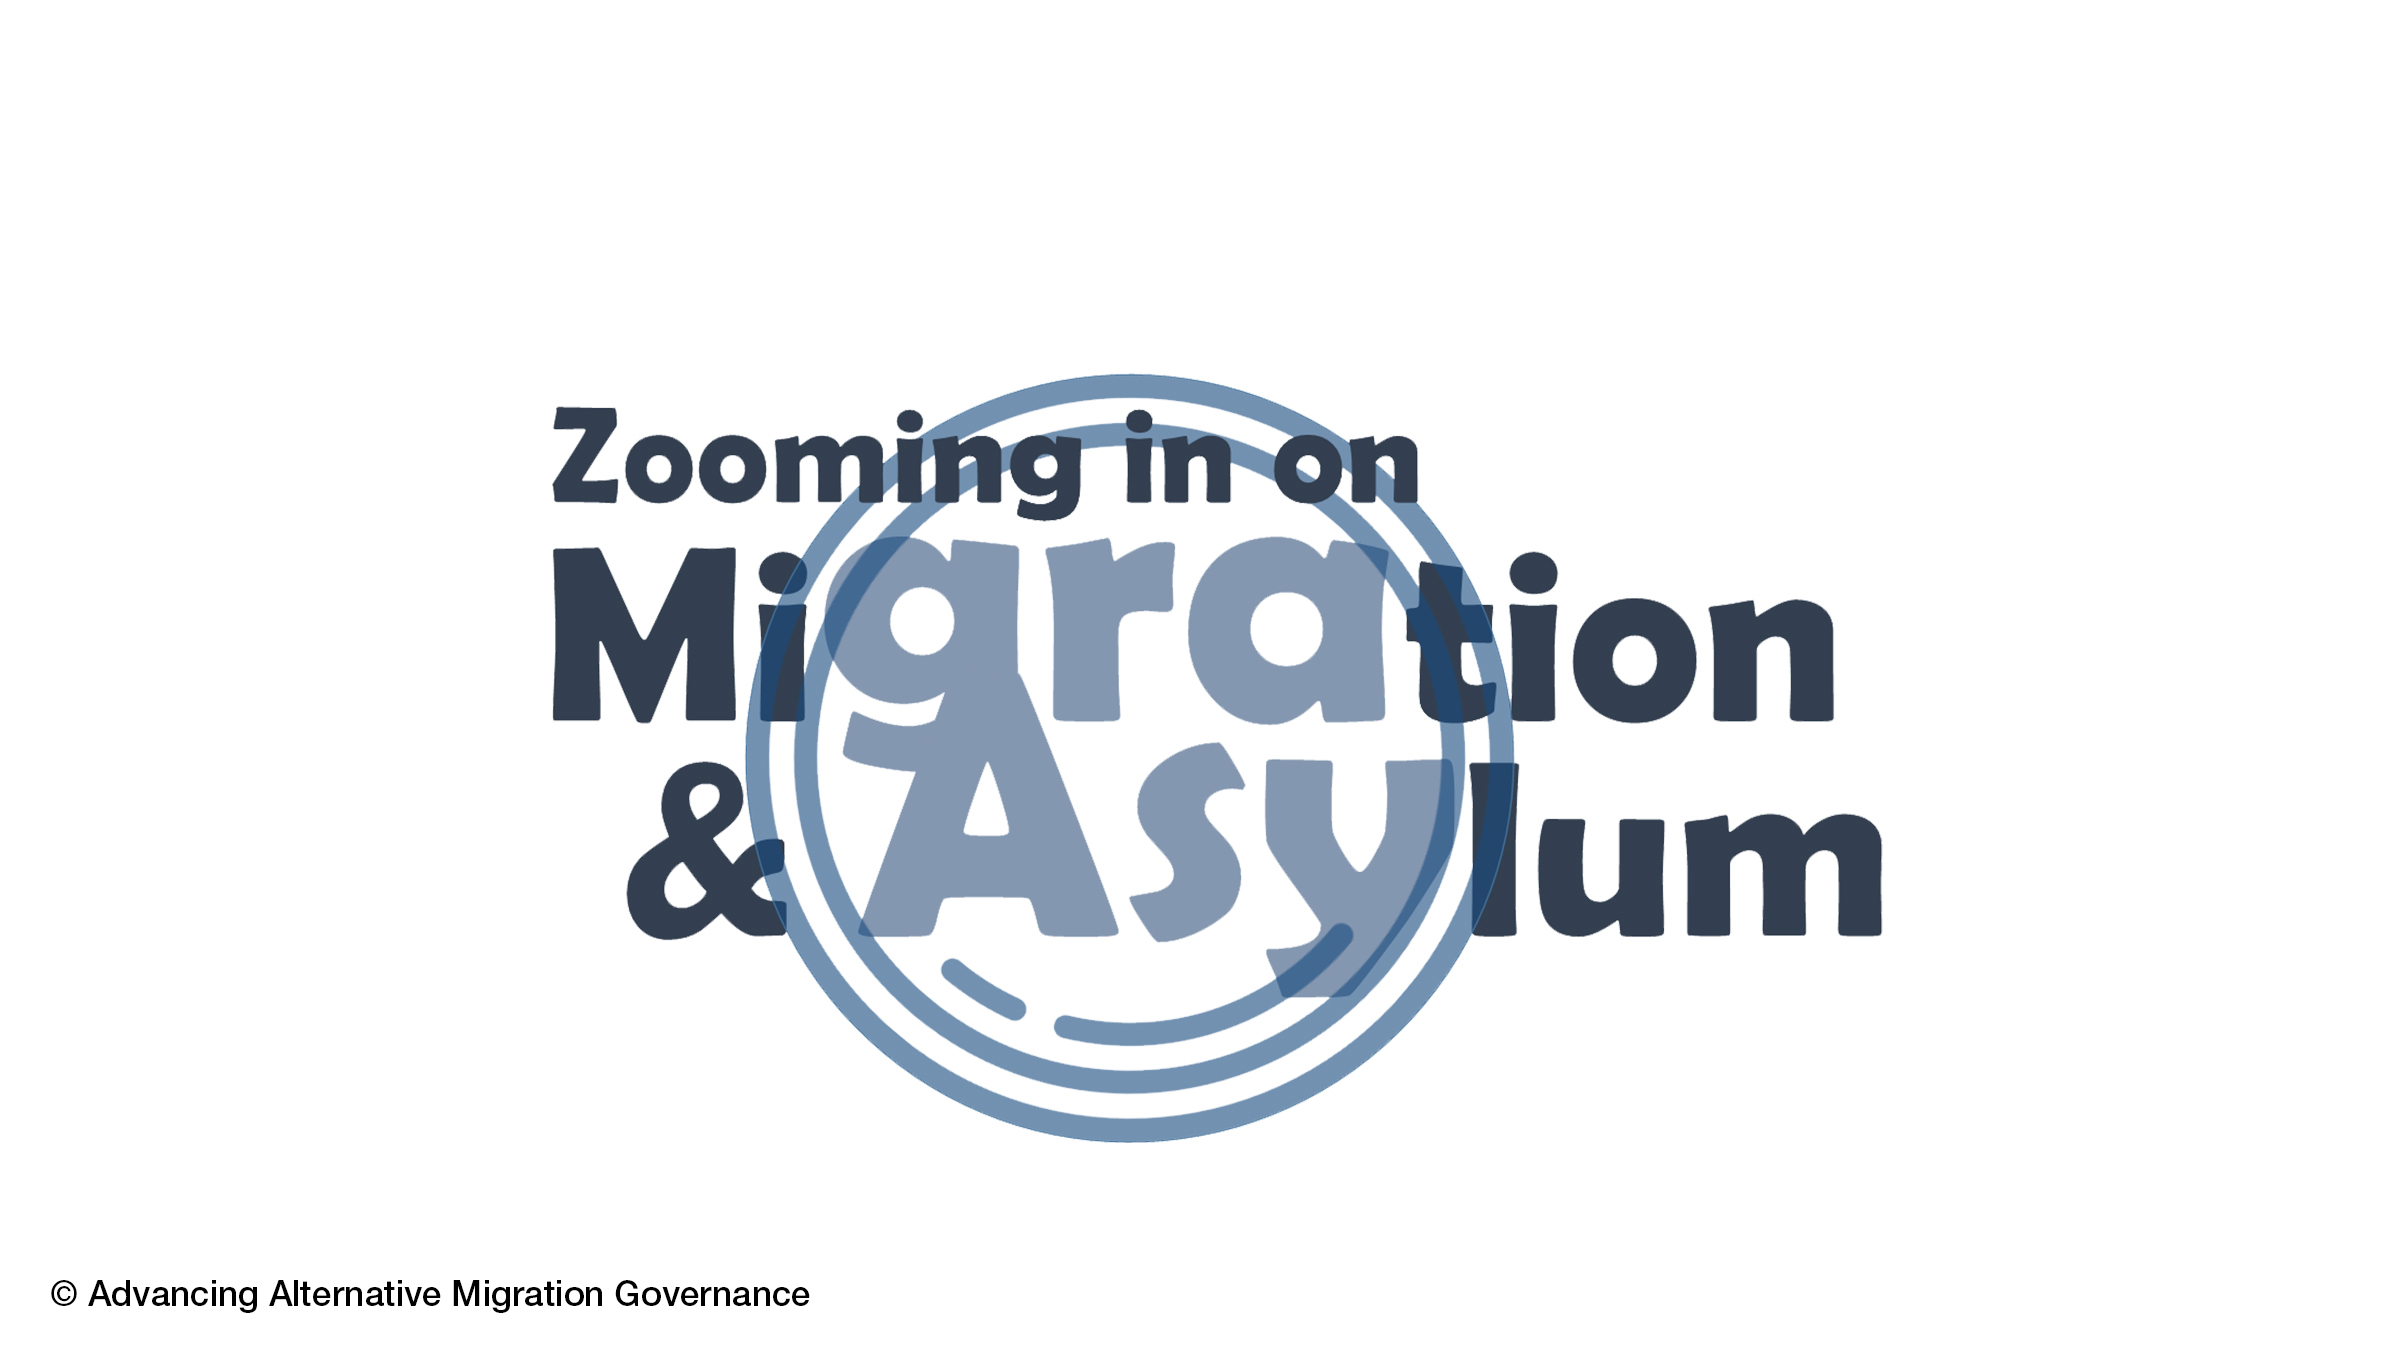 Webinar Series "Zooming in on Migration and Asylum"